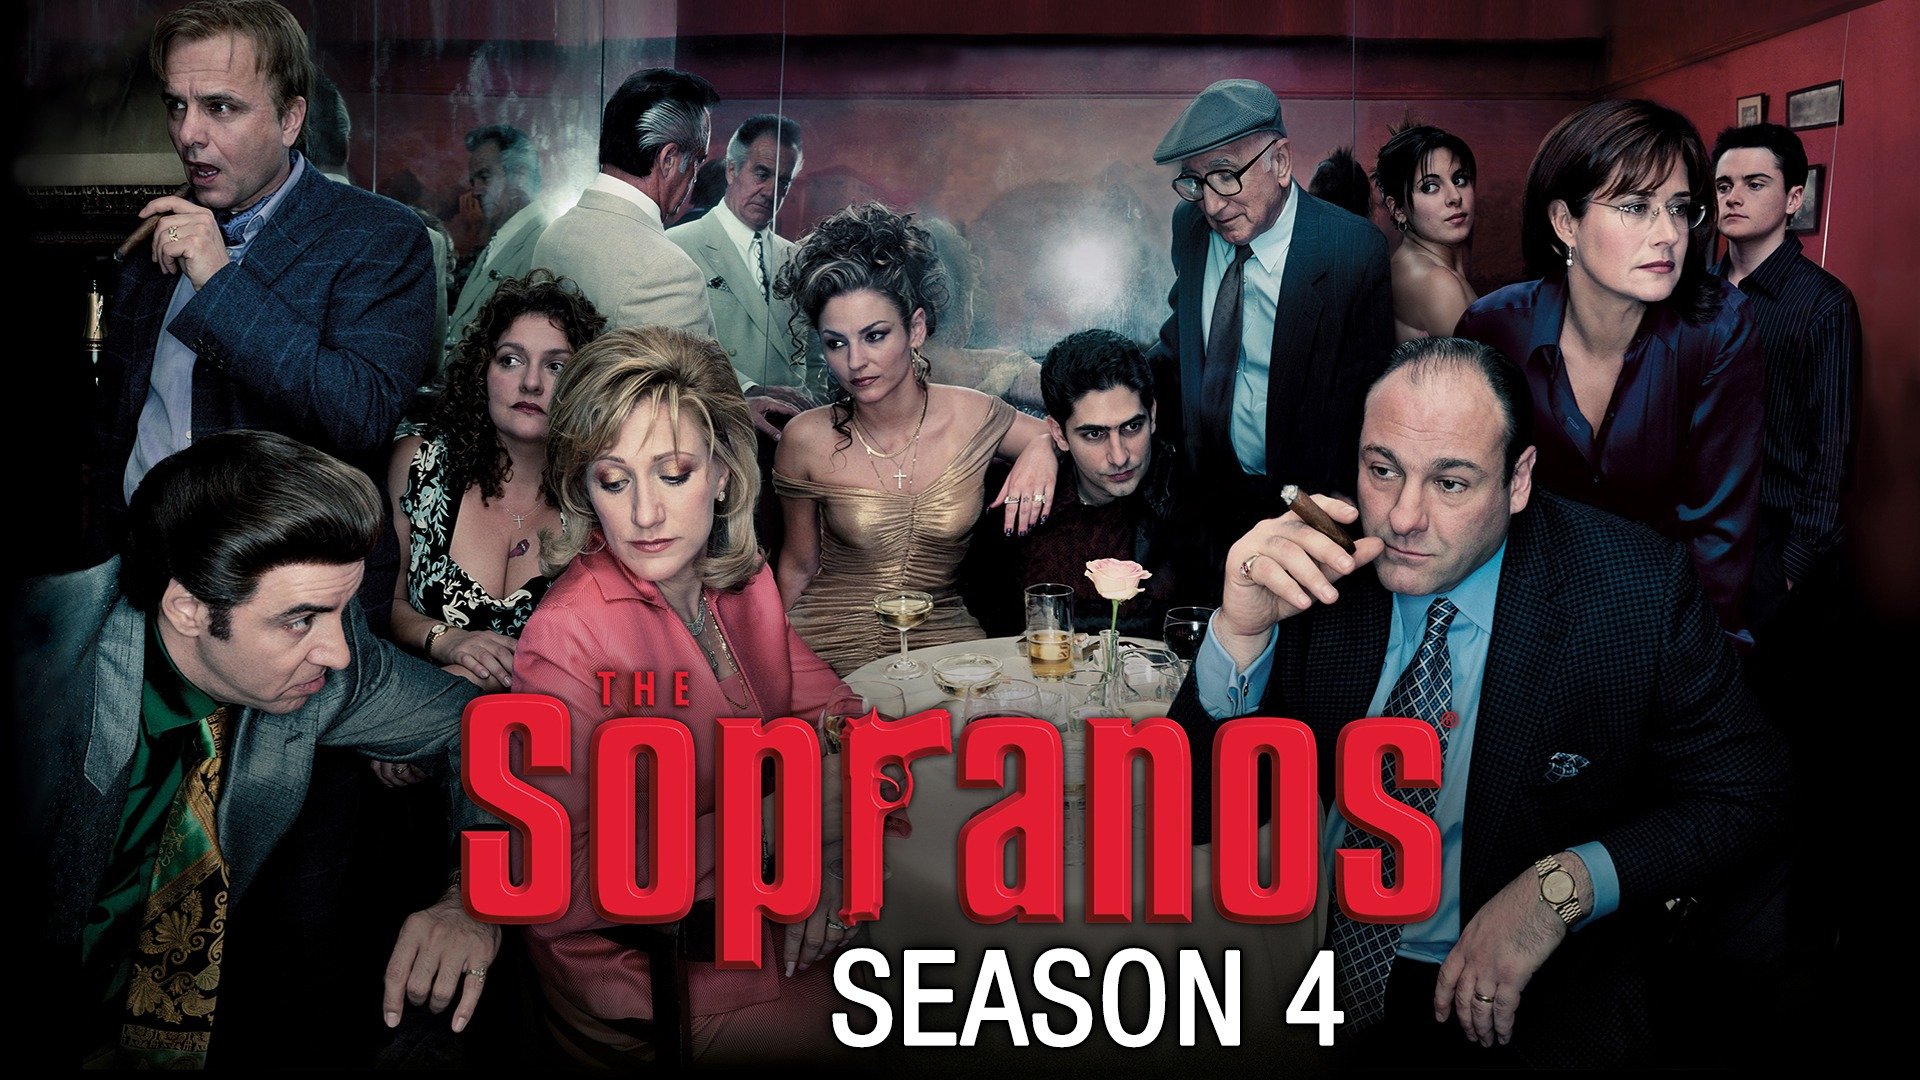 Review of The Sopranos: Season 4